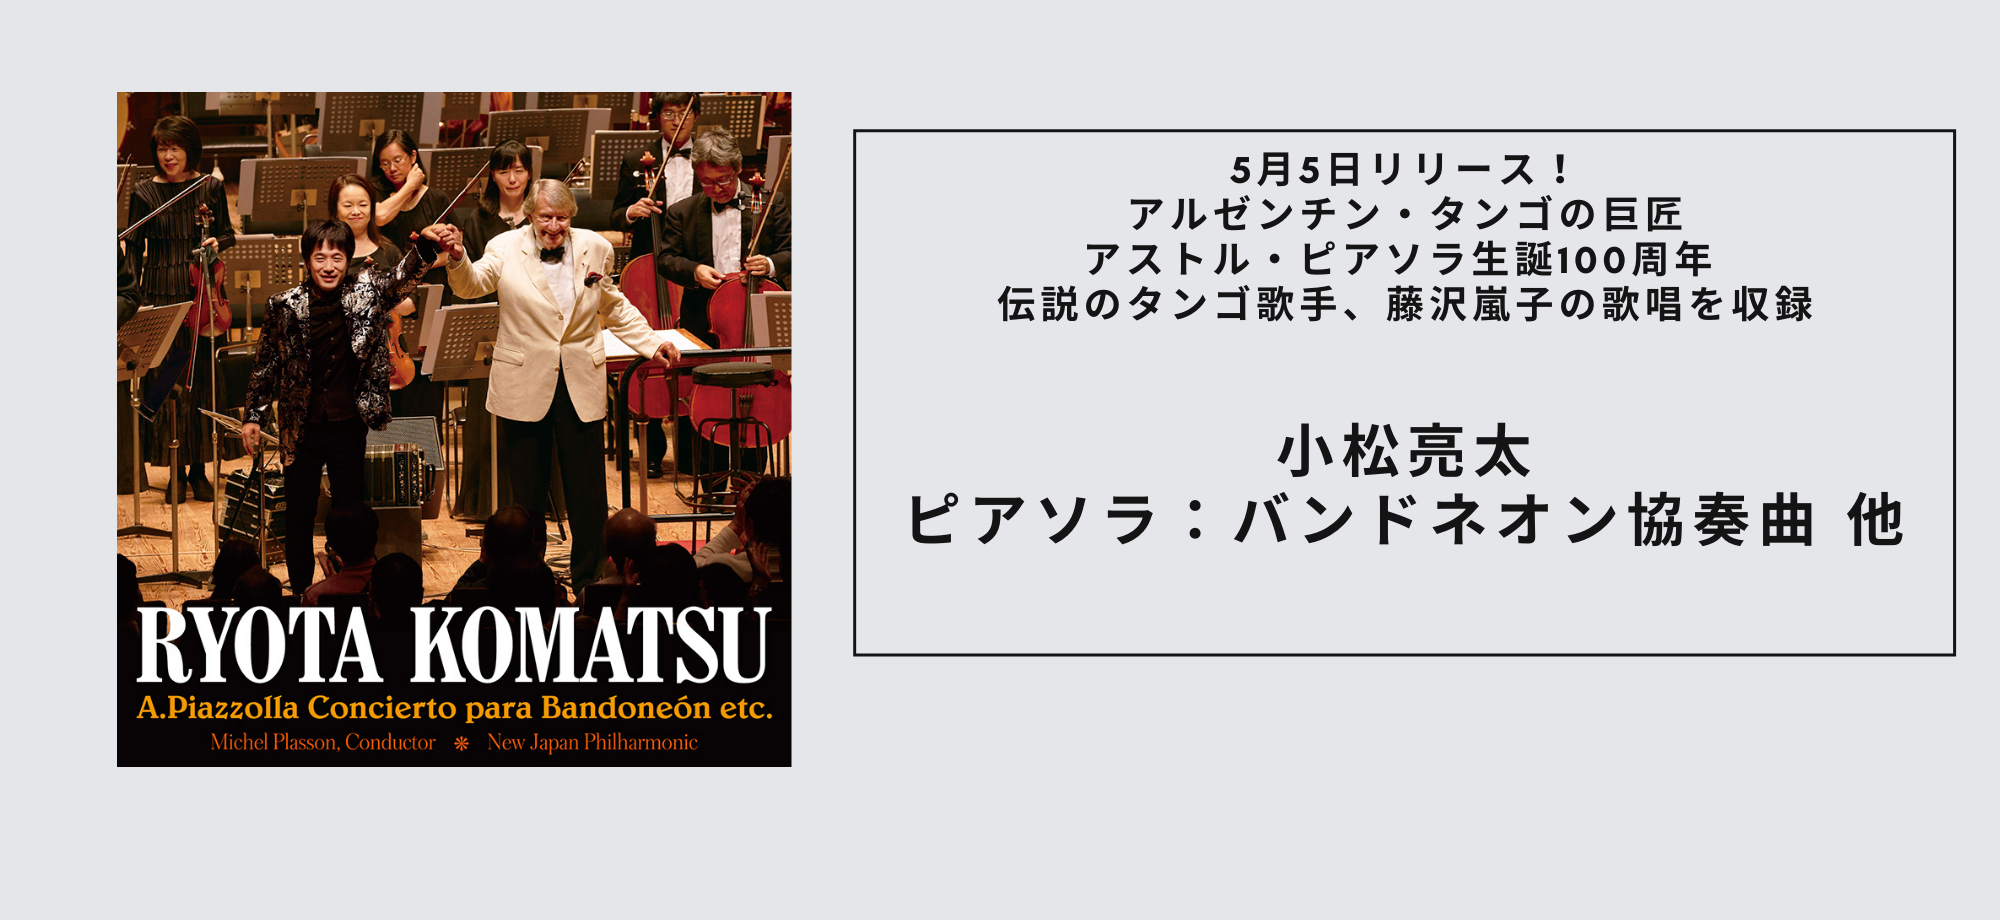 Ryota Komatsu Official Site